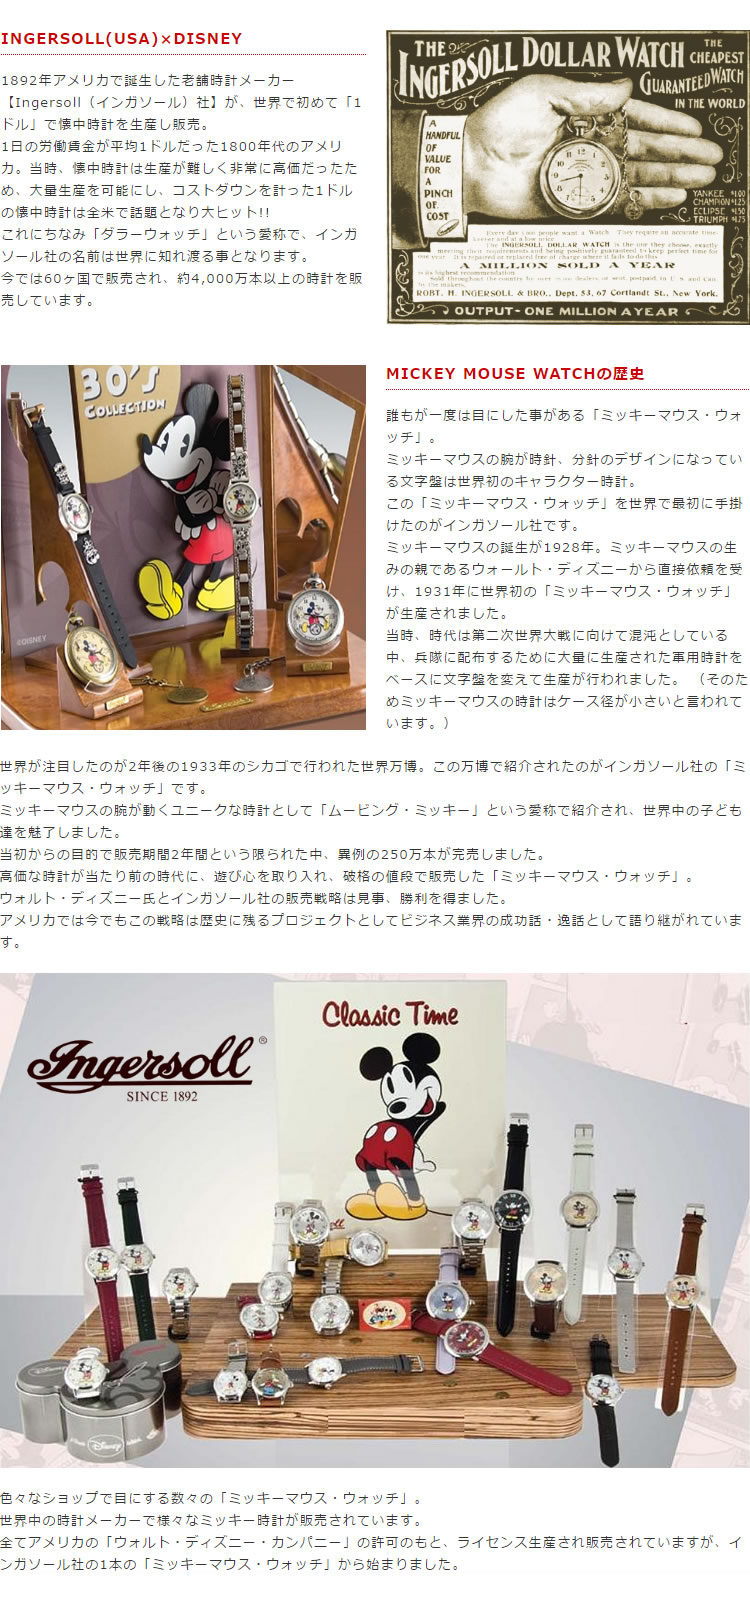 Ingersoll Disney WALL CLOCK